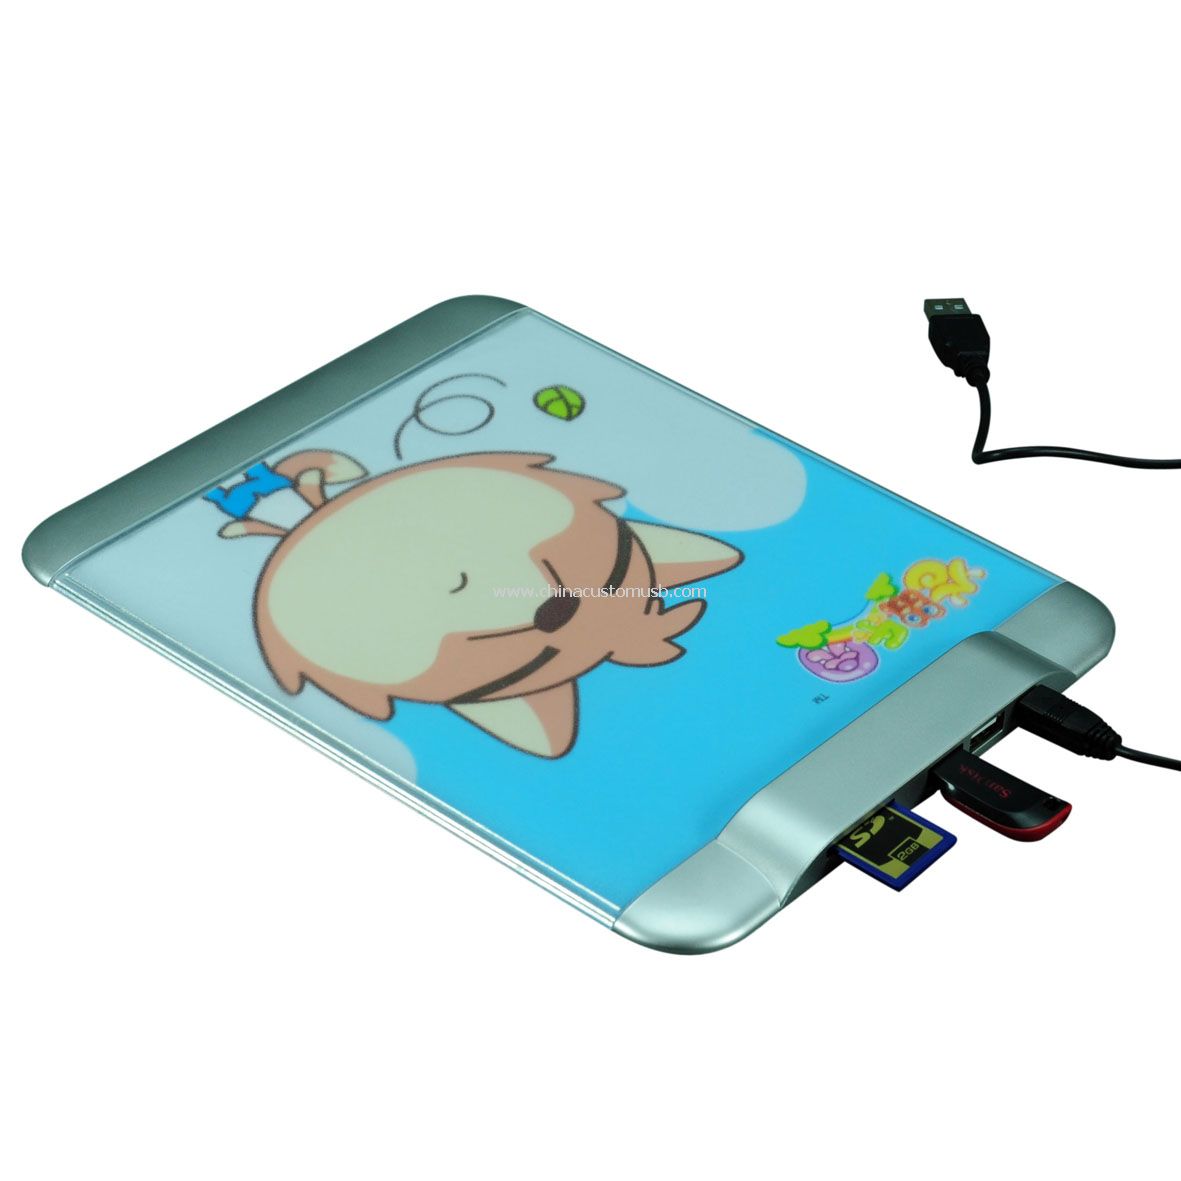 SD TF card reader USB Hub mouse pad